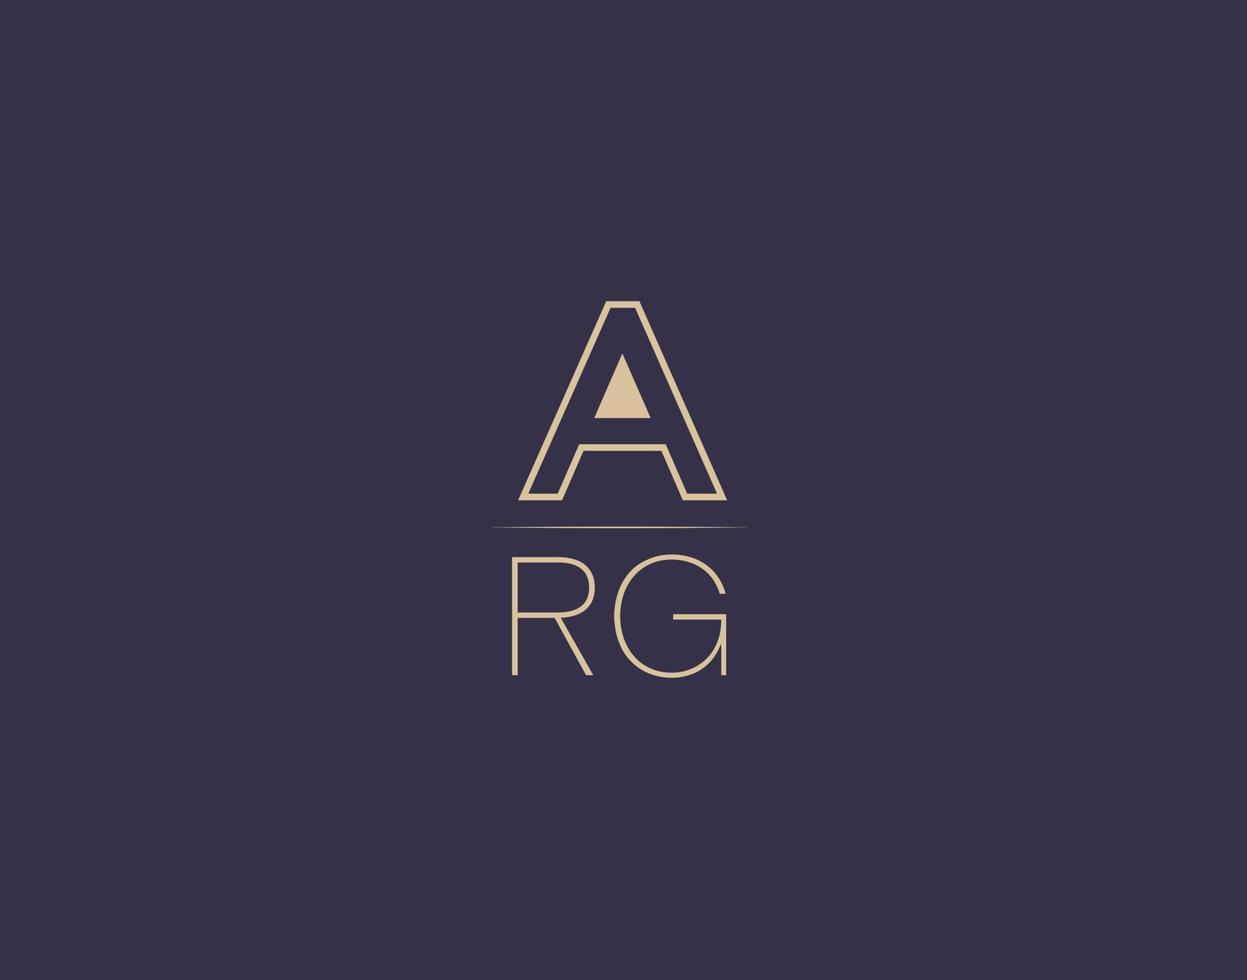 ARG letter logo design modern minimalist vector images